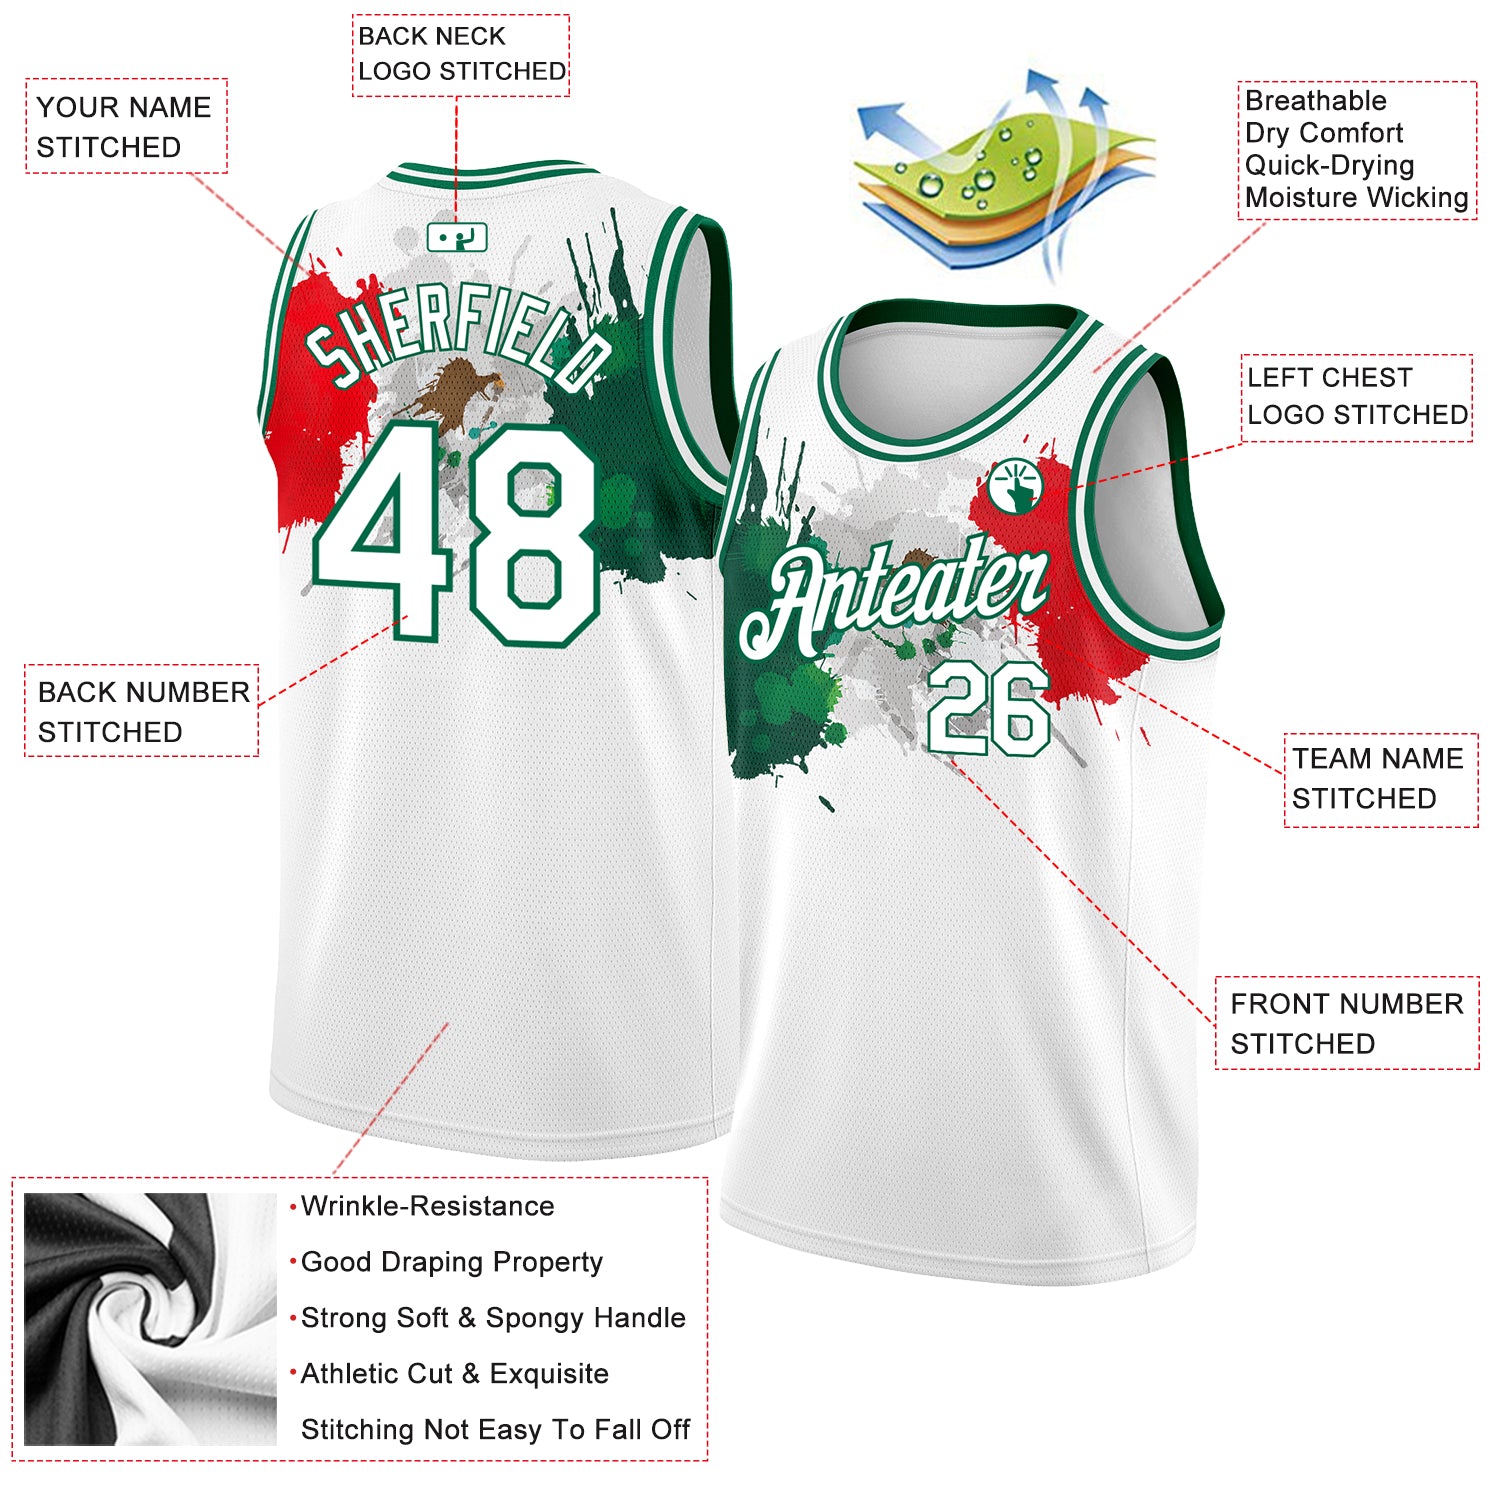 Basketball Jersey Design Uniform Polyester Quick-dry